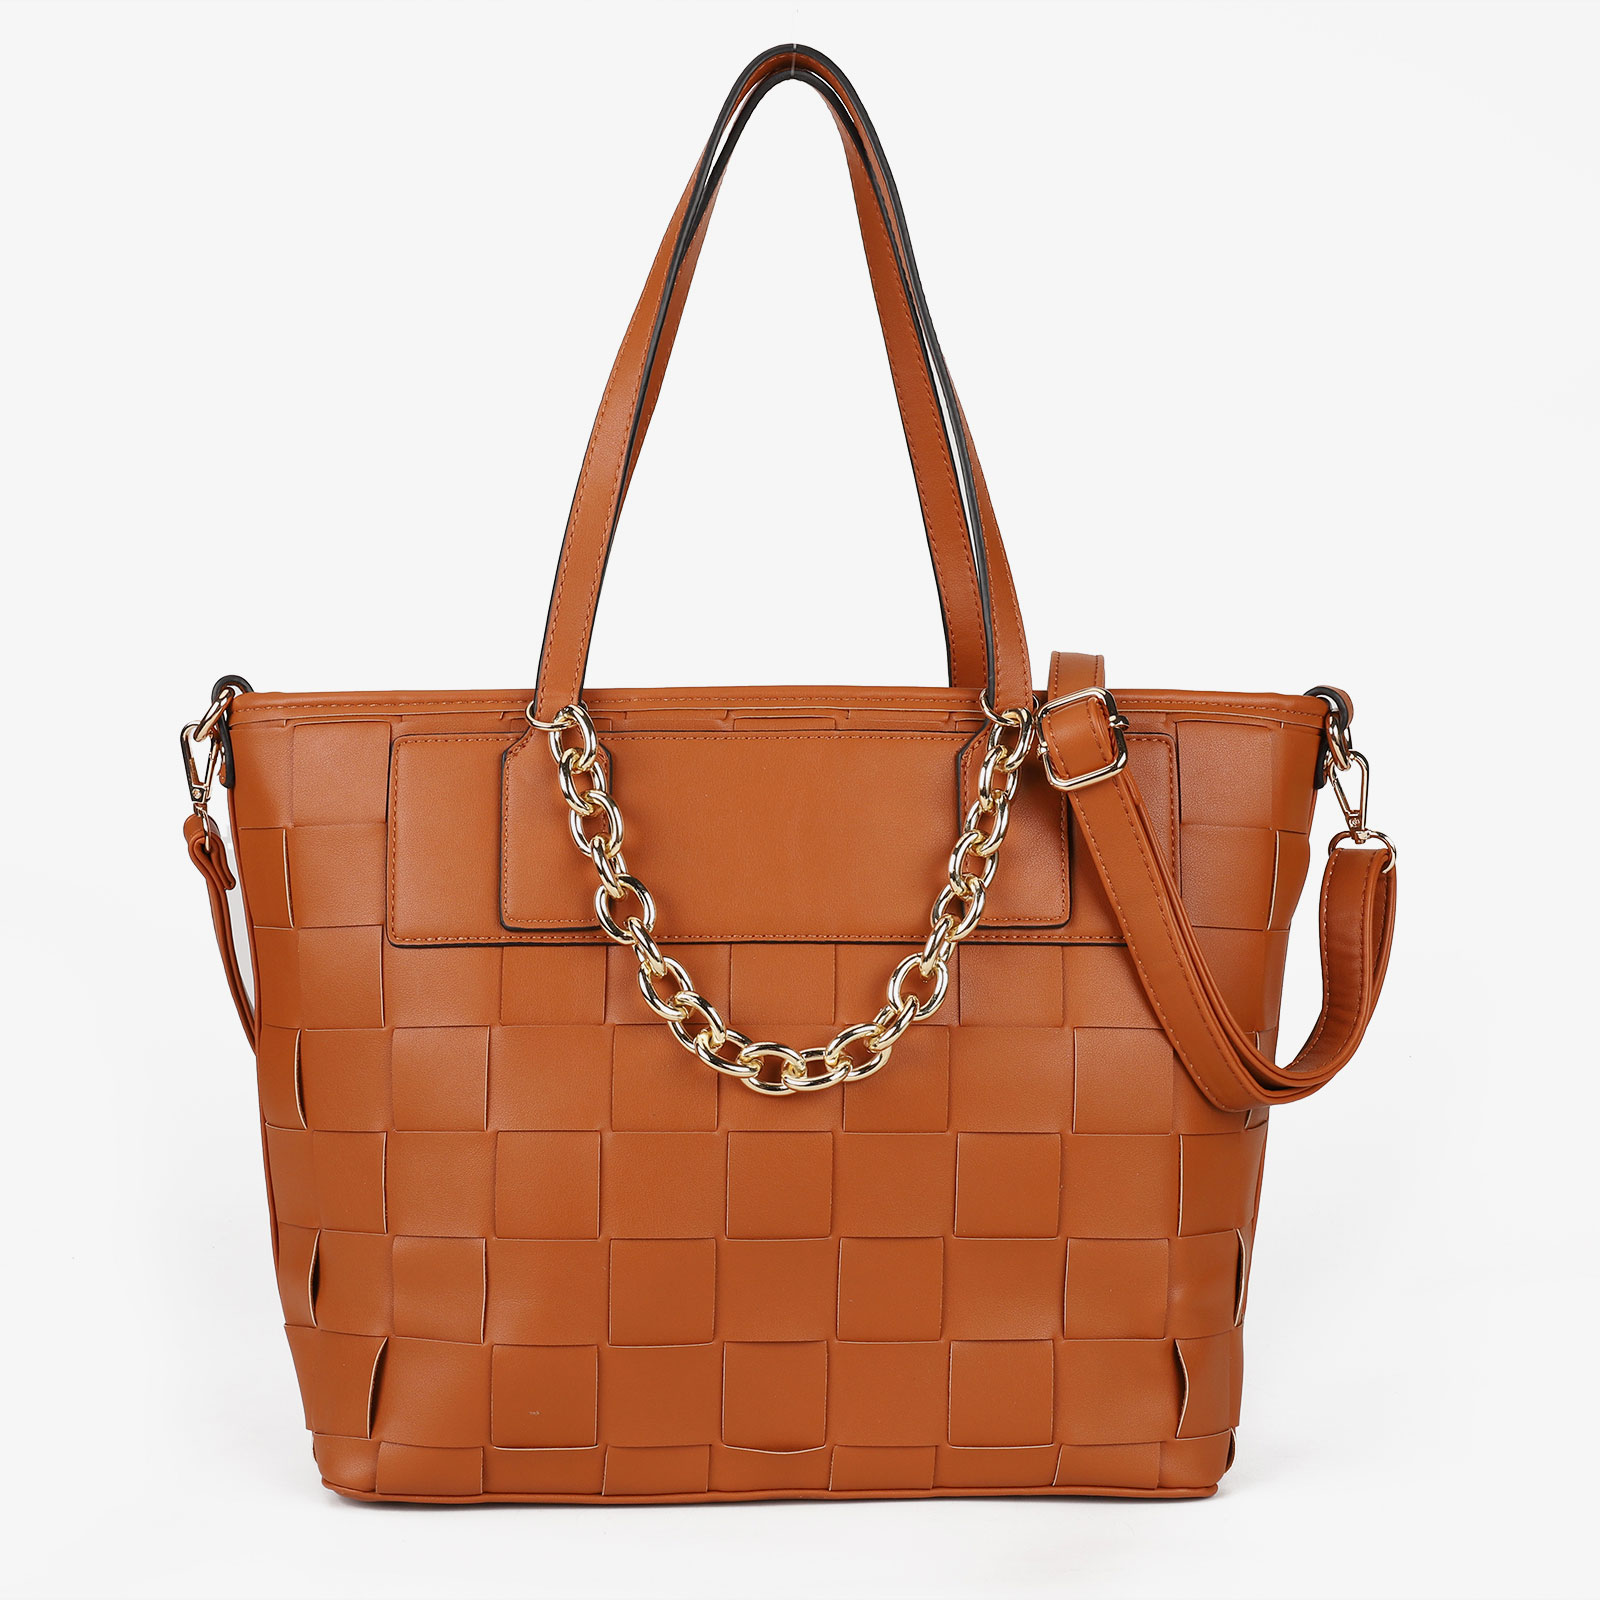 vkoo fashion handbags fall Women‘s tote bag with zipper